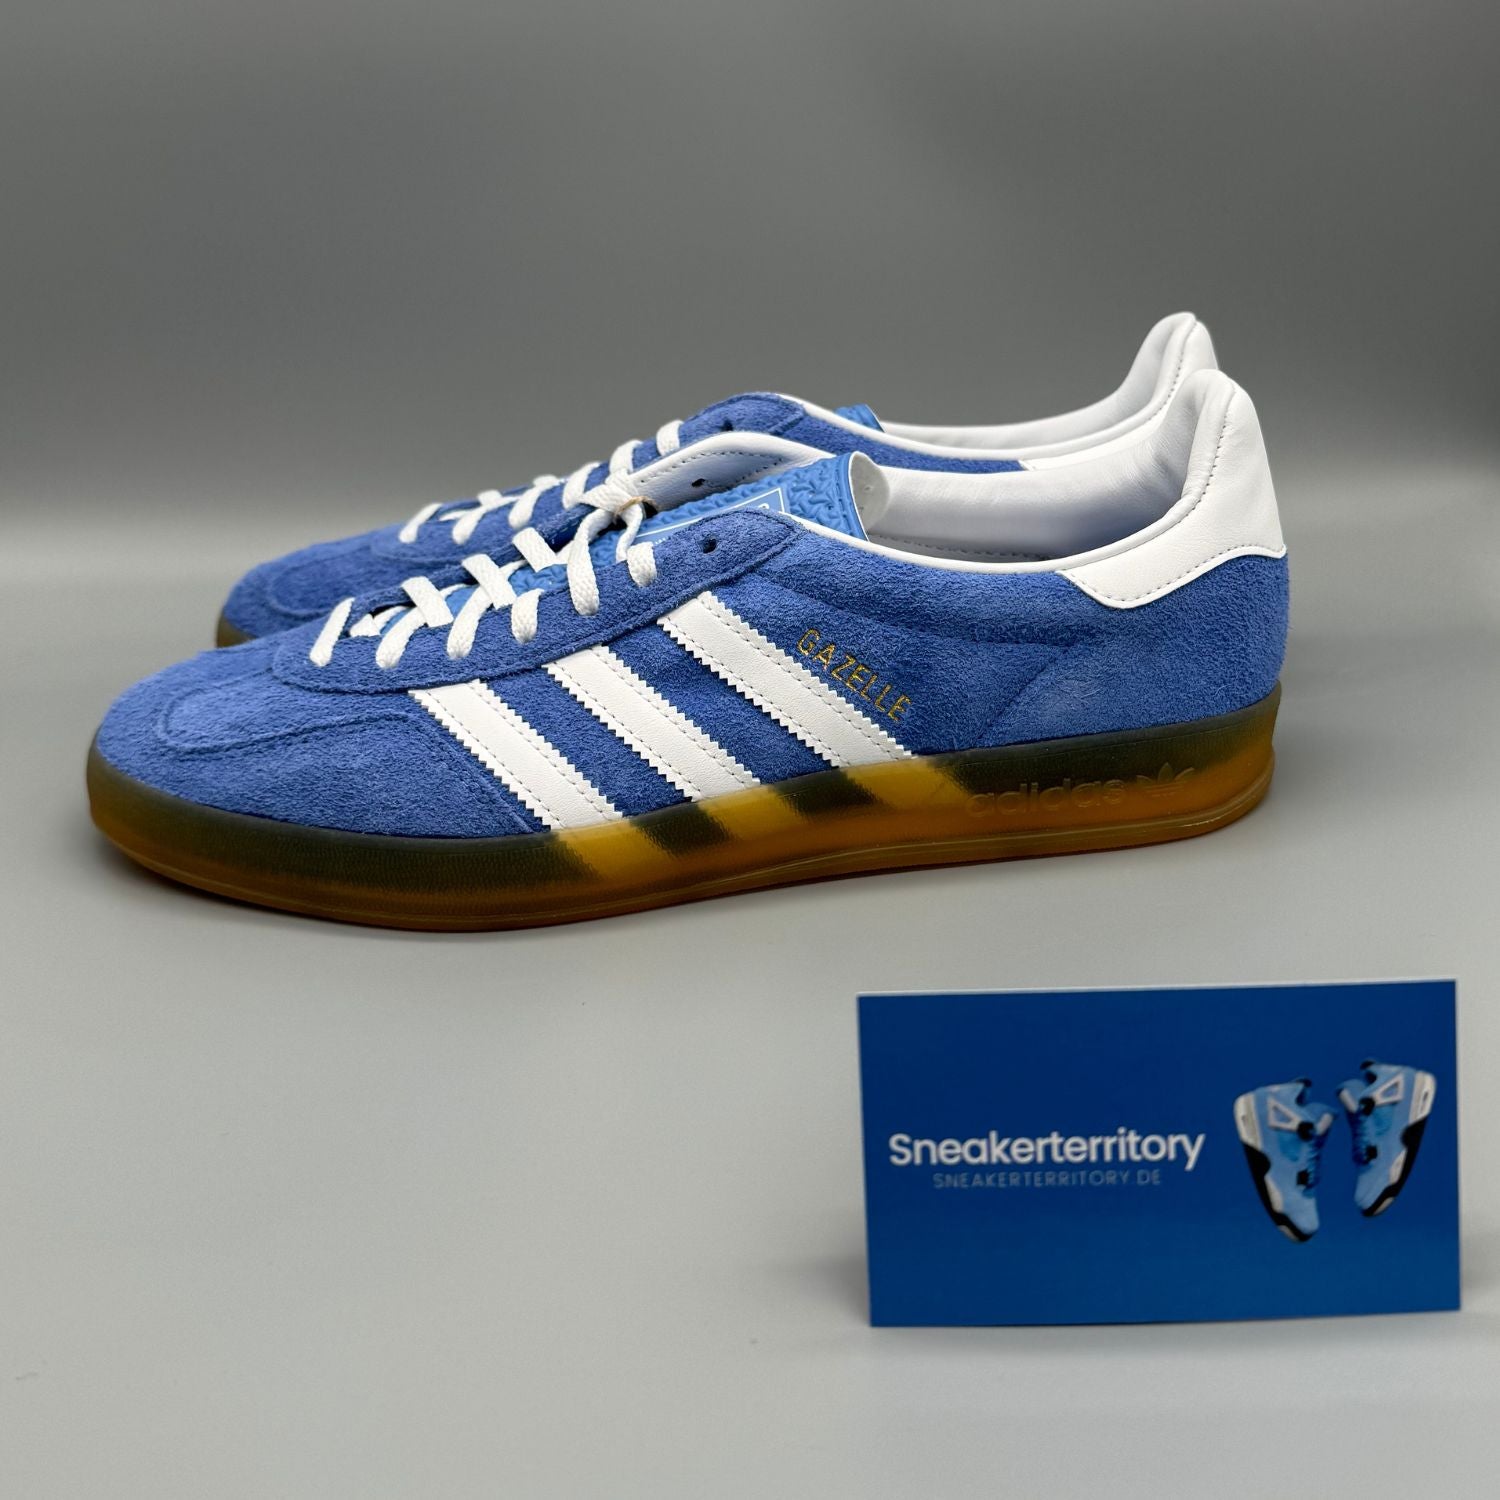 Adidas Gazelle Indoor Blue Fusion Gum (W) - Sneakerterritory; Sneaker Territory